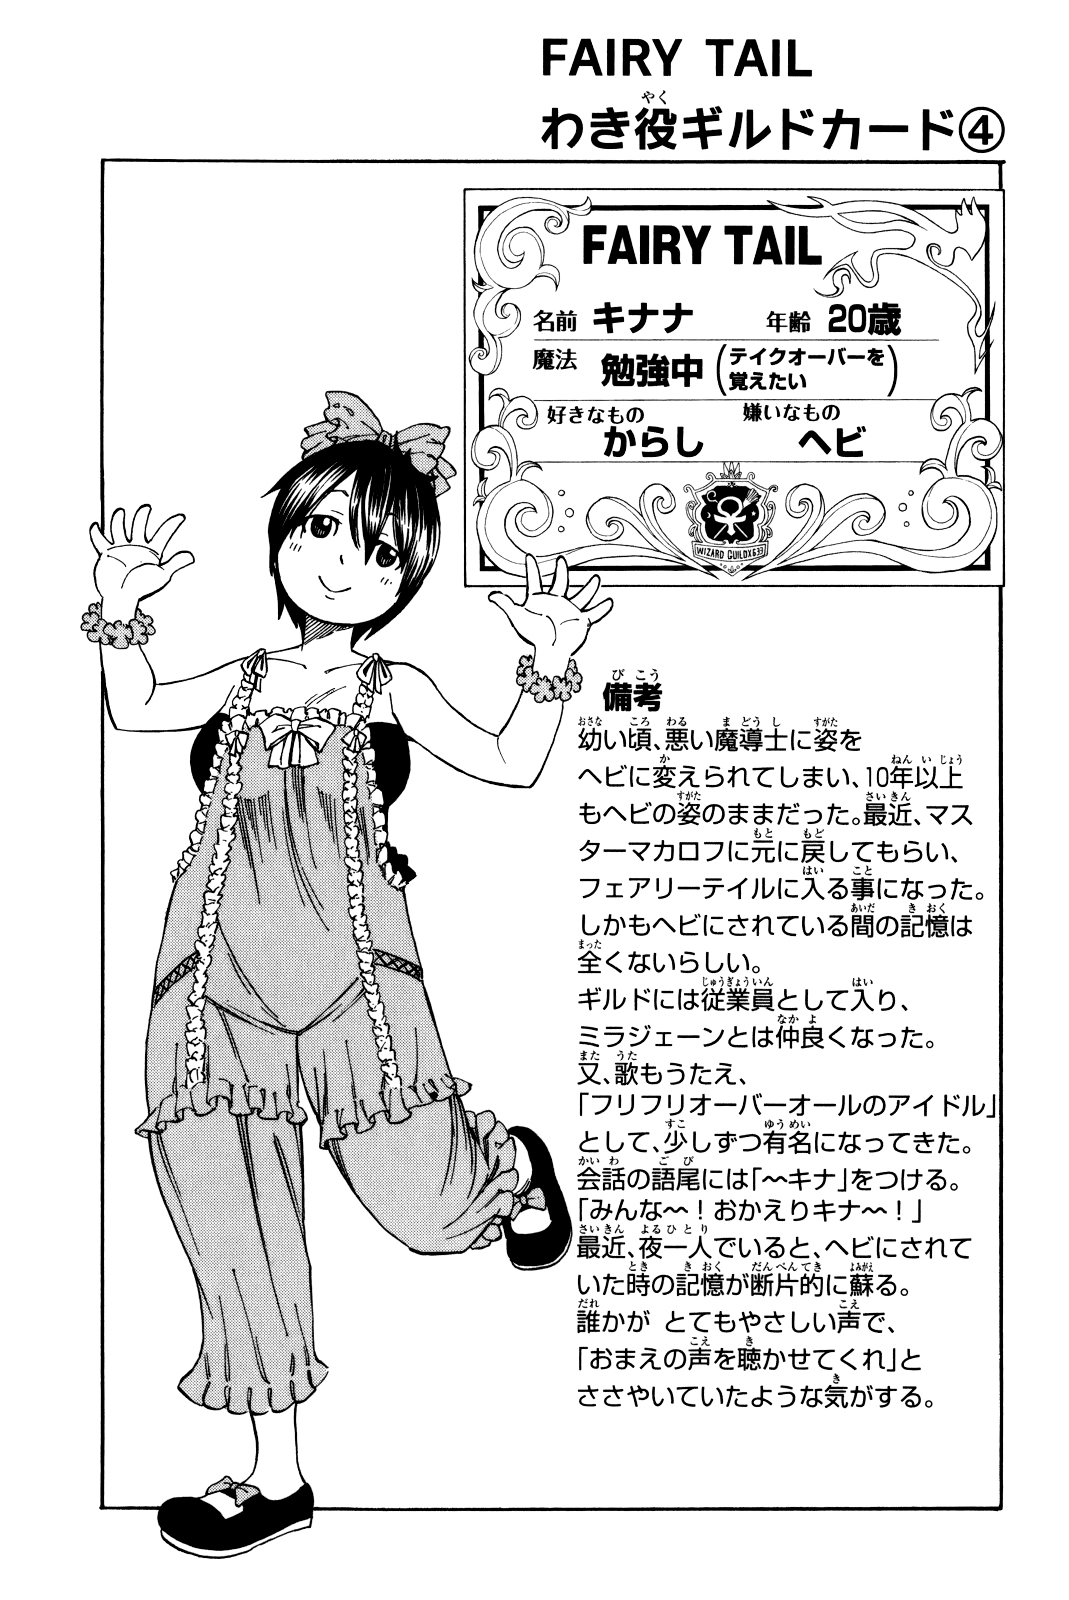 Fairy Tail (Manga) - TV Tropes